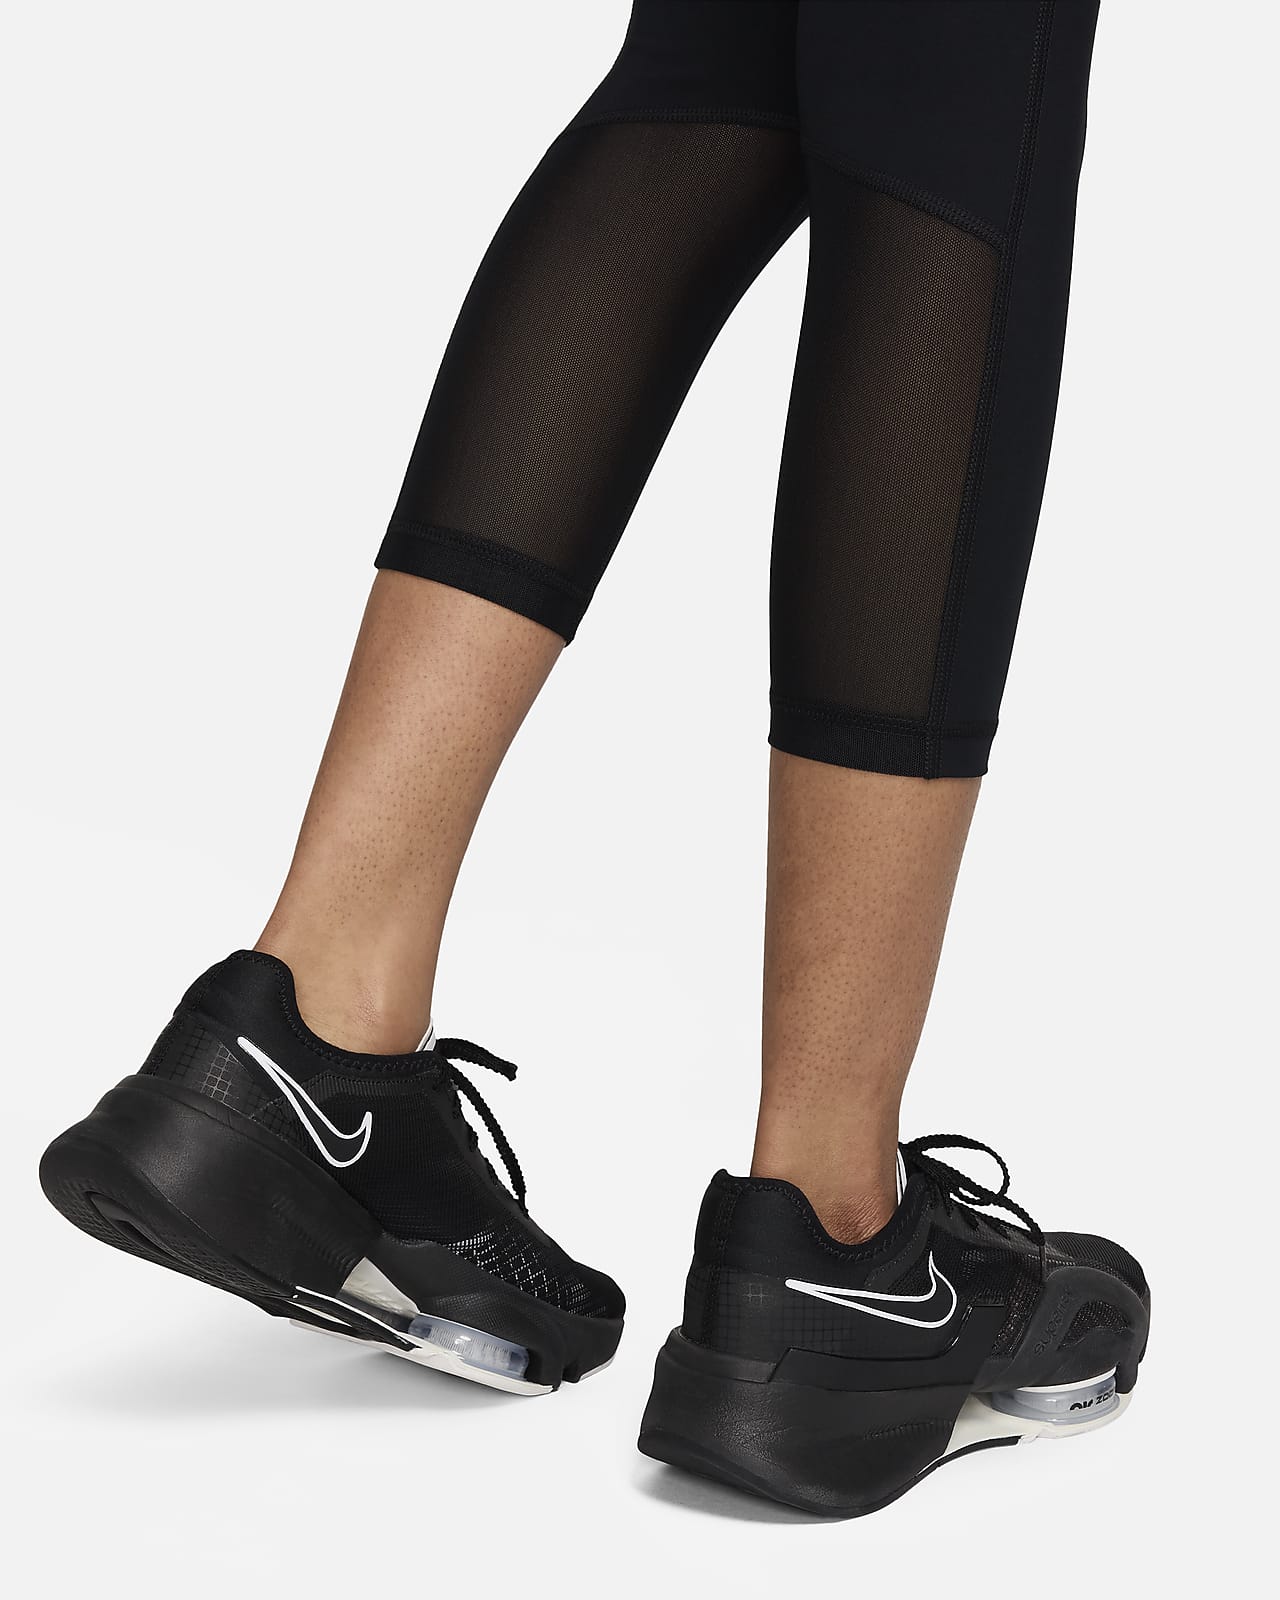 Nike Pro 365 Women's Mid-Rise Cropped Mesh Panel Leggings.